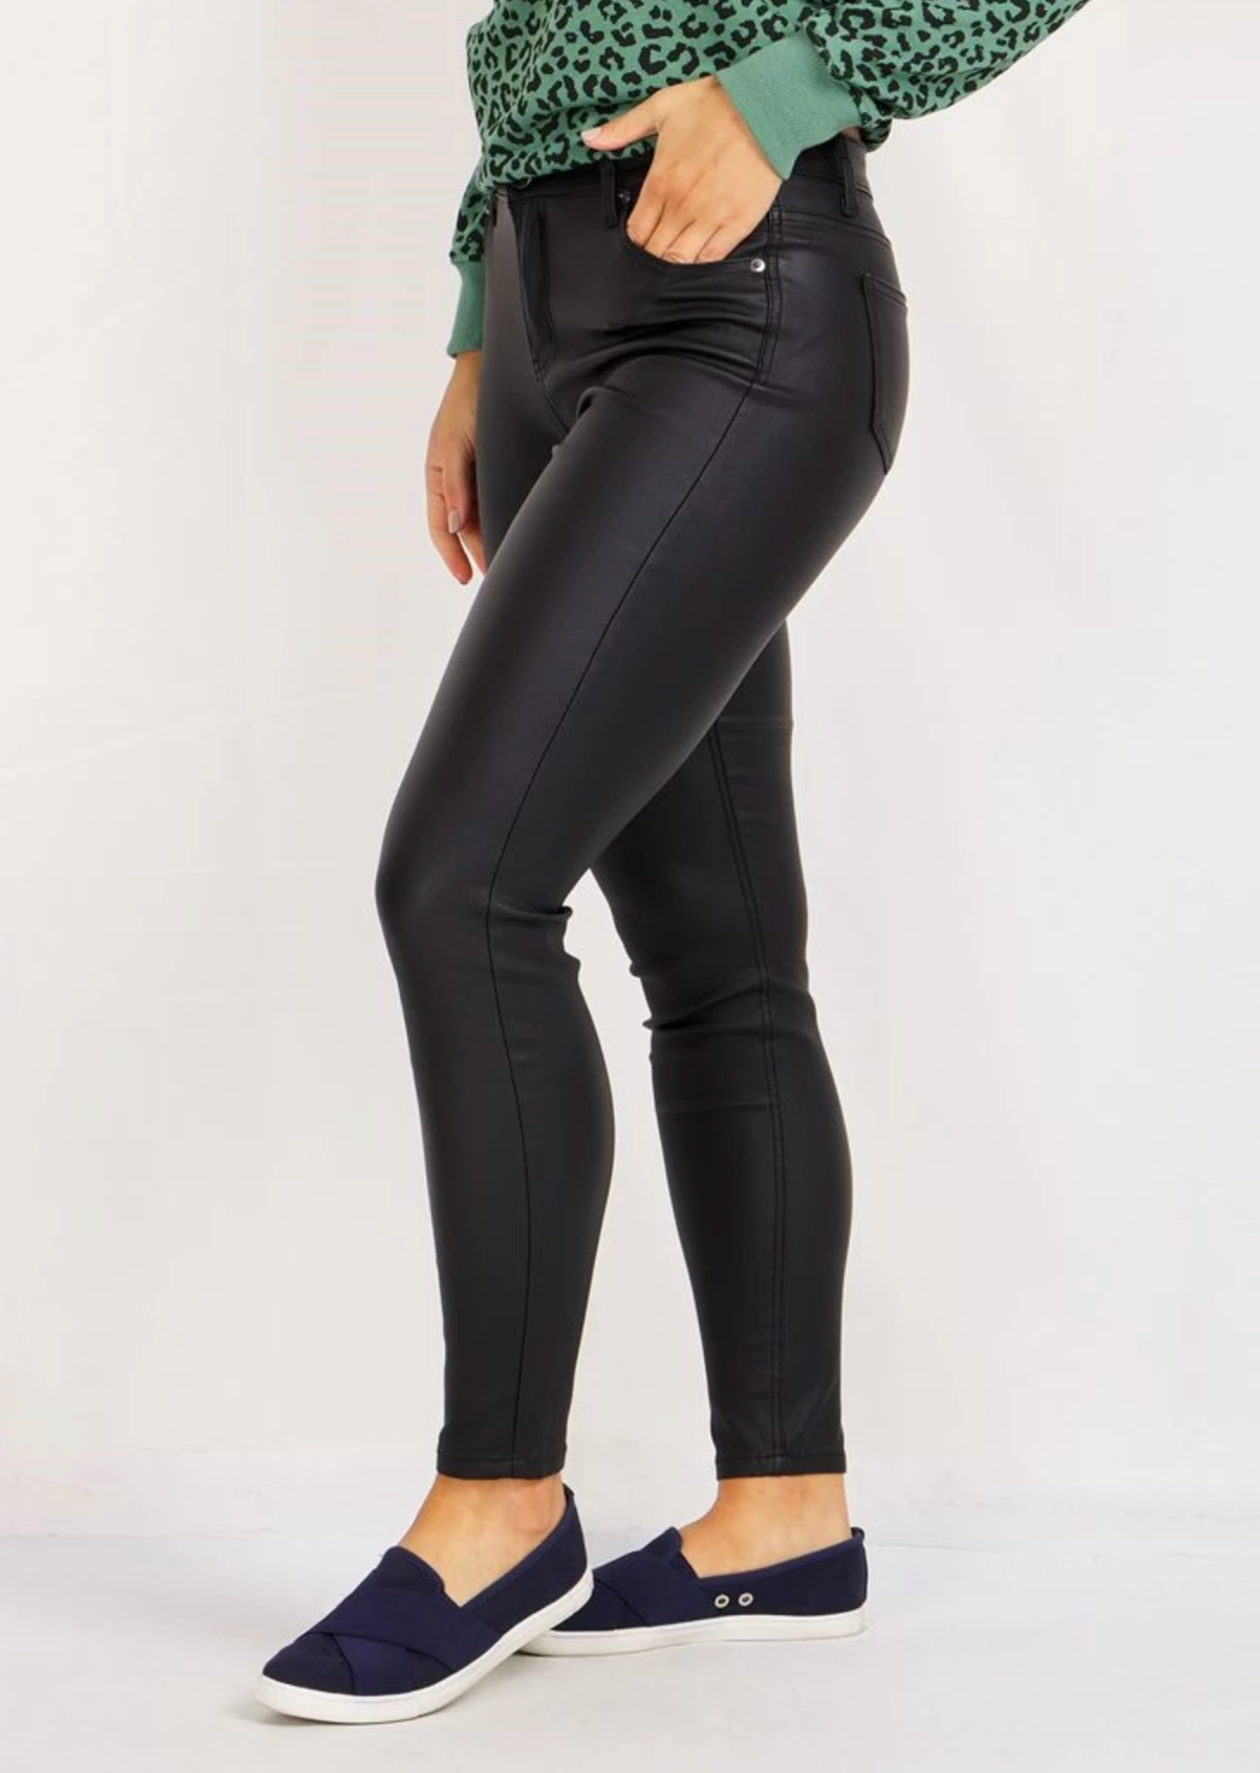 Zip Leg Leather Look Pant Black Pants Full Length Women's, 42% OFF